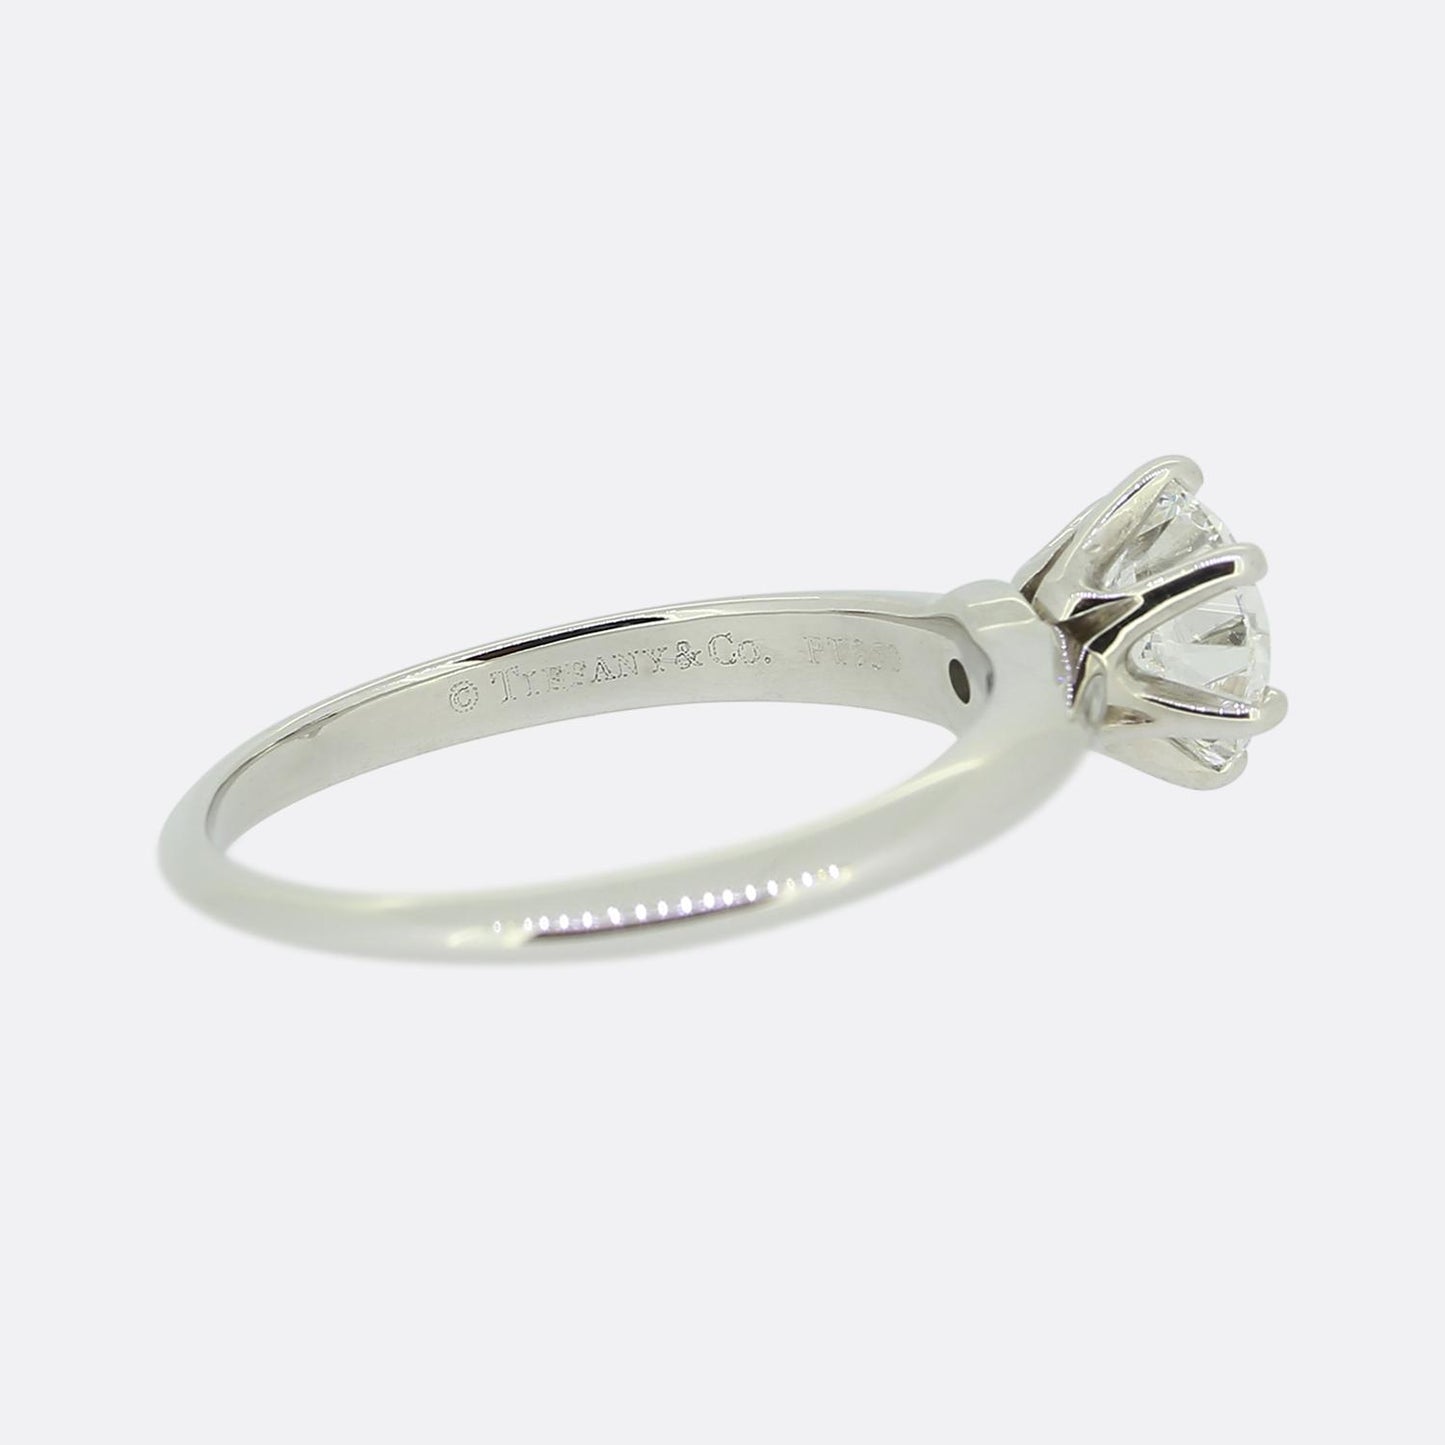 Tiffany & Co. 1.01 Carat Diamond Engagement Ring